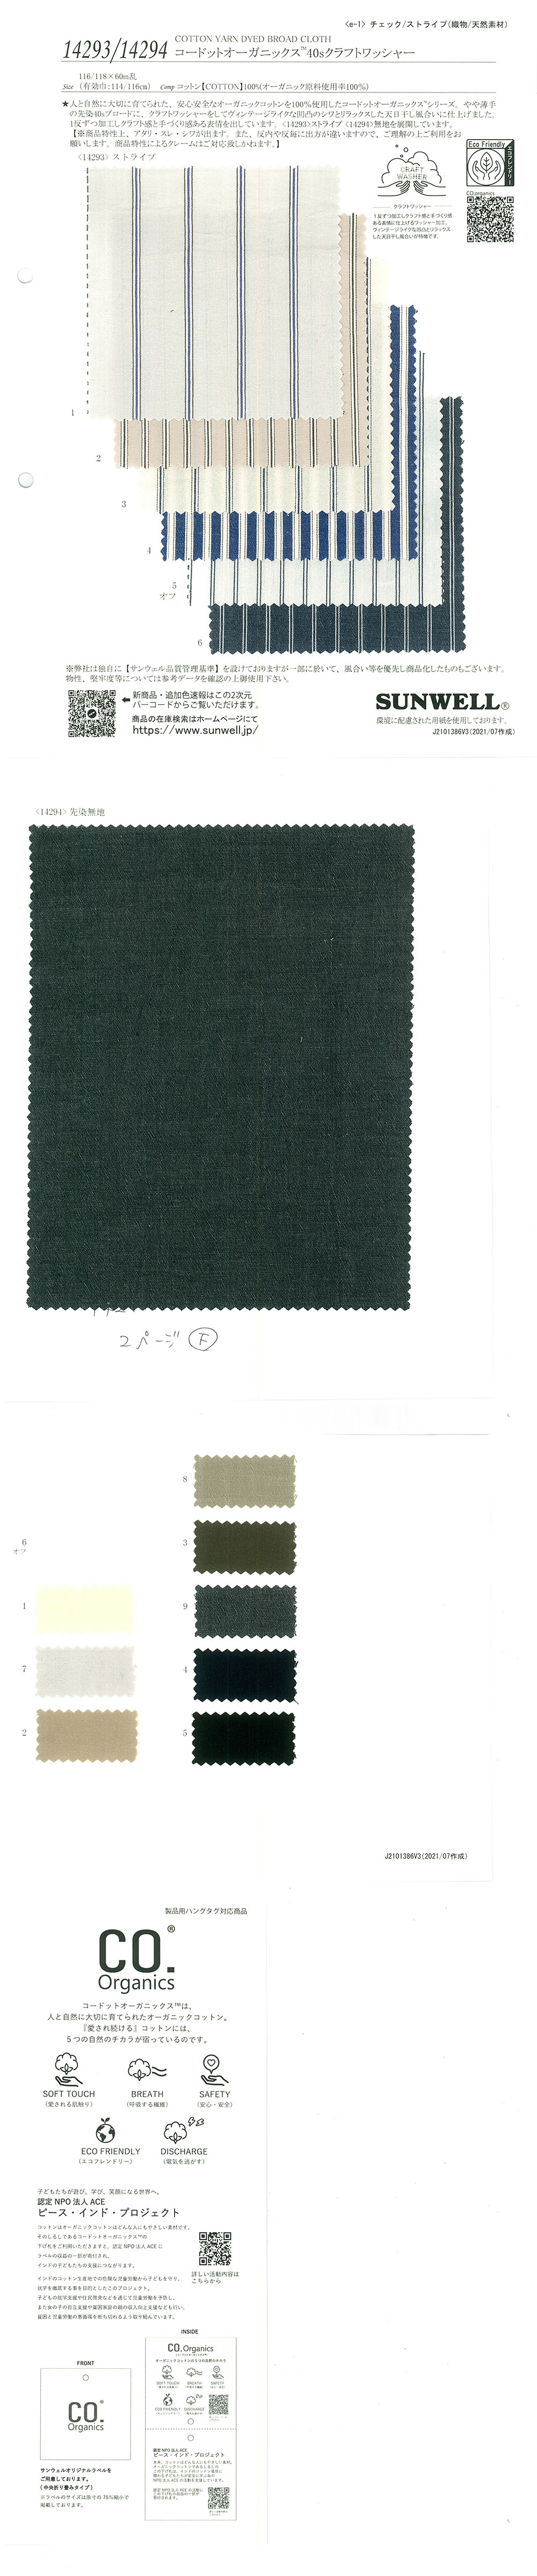 14293 Cordot Organics (R) 40 Single Thread Craft Stripe[Fabrication De Textile] SUNWELL